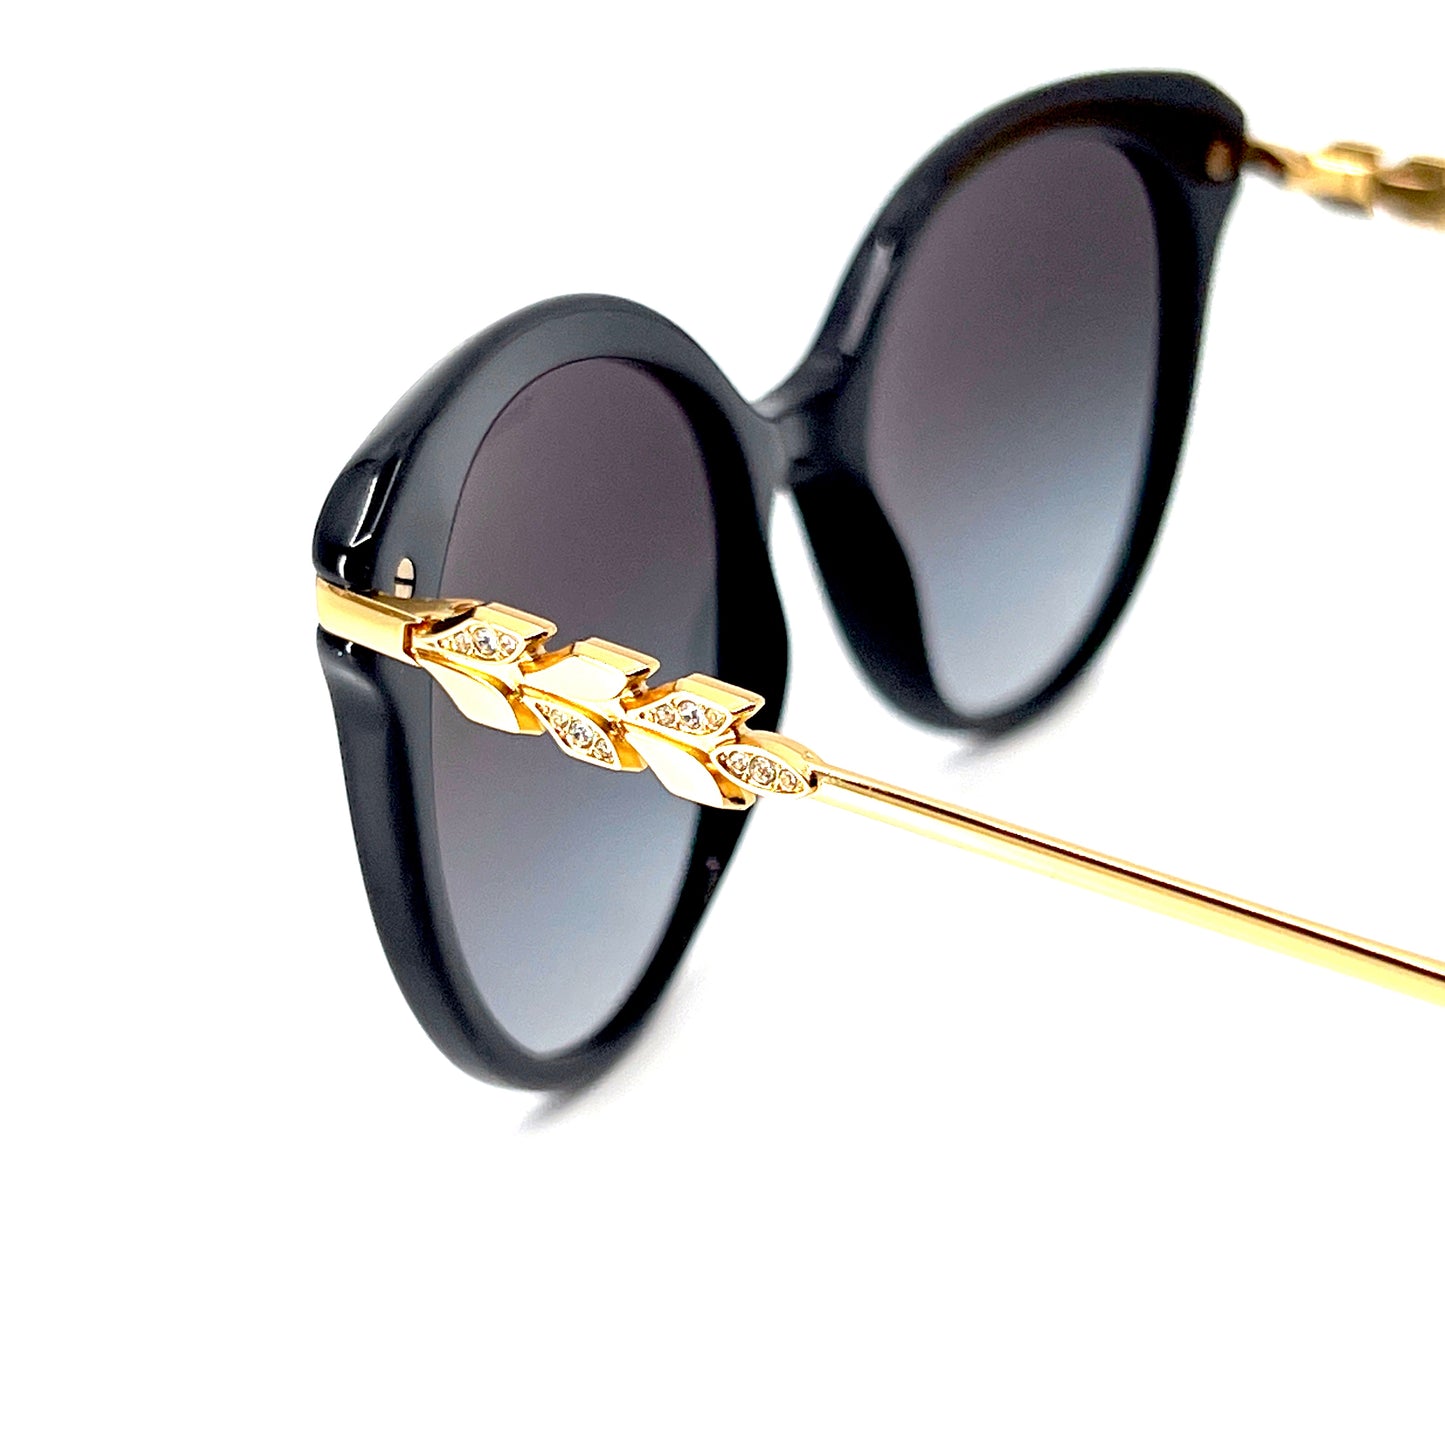 Tiffany Sunglasses TF4189-B 8344/3C